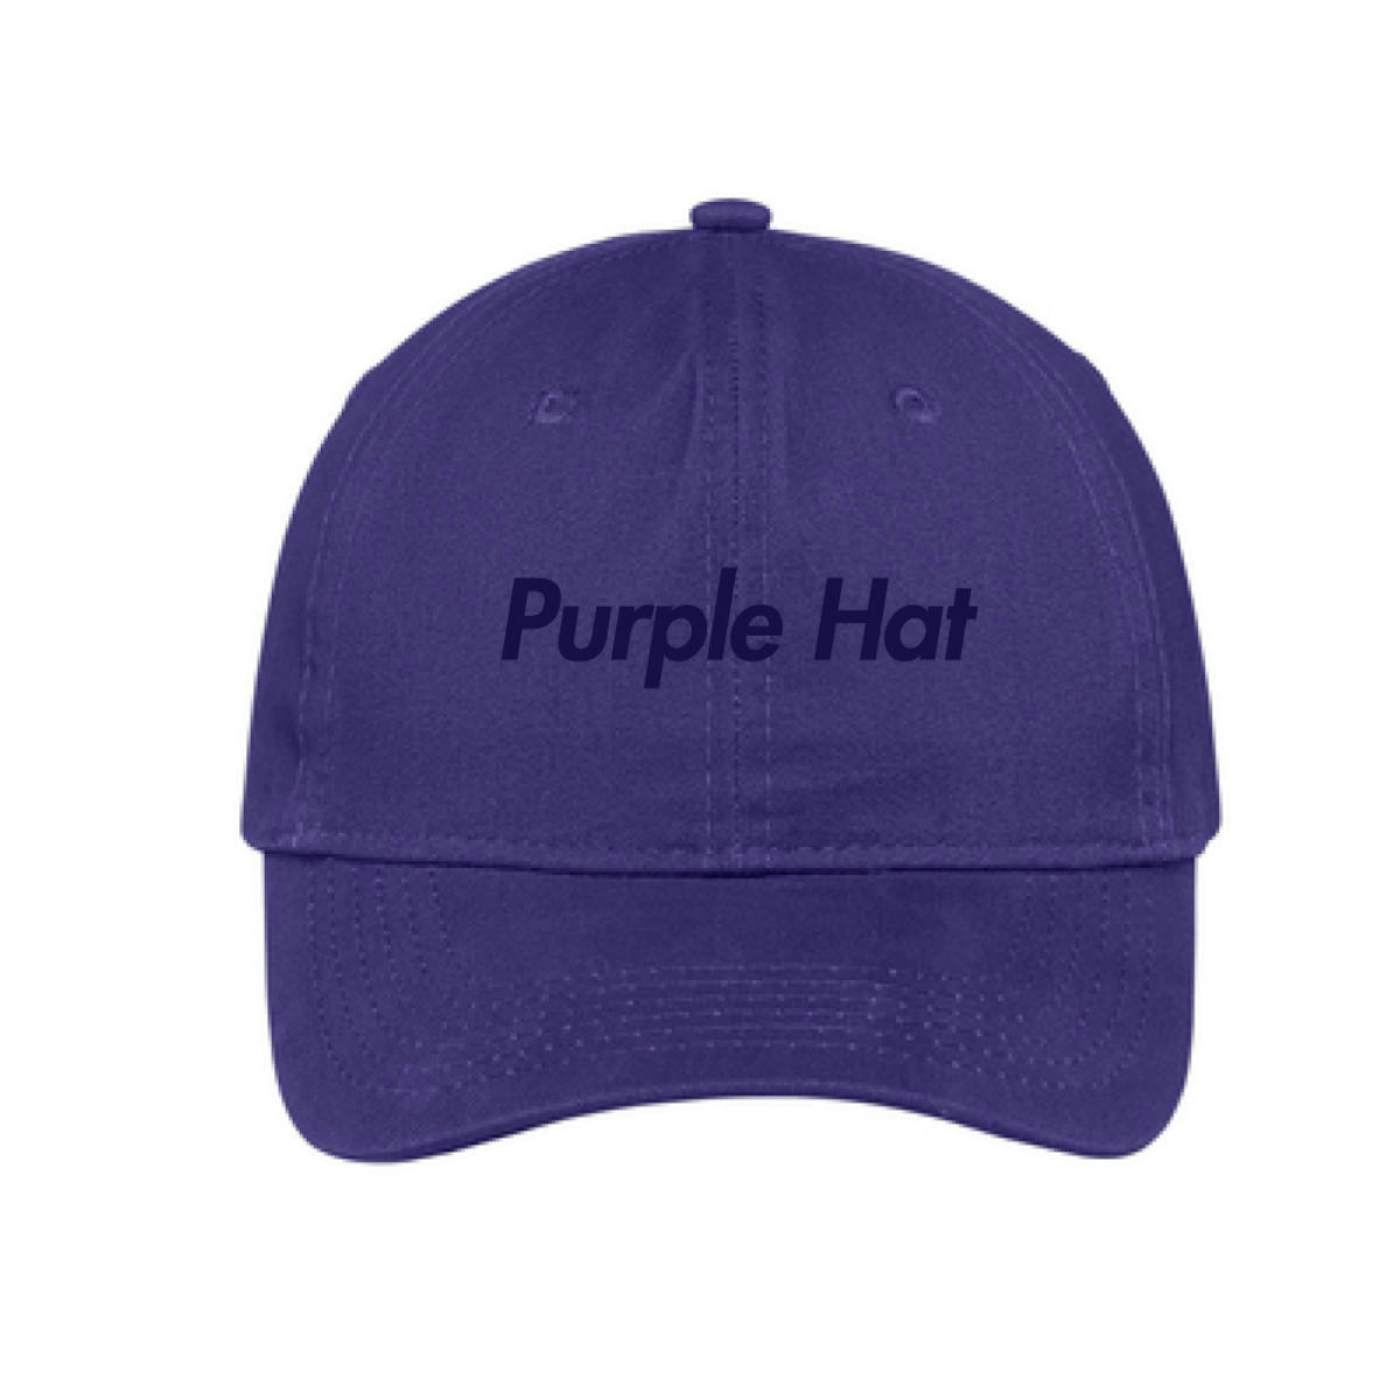 Sofi Tukker Purple Hat Dad Hat